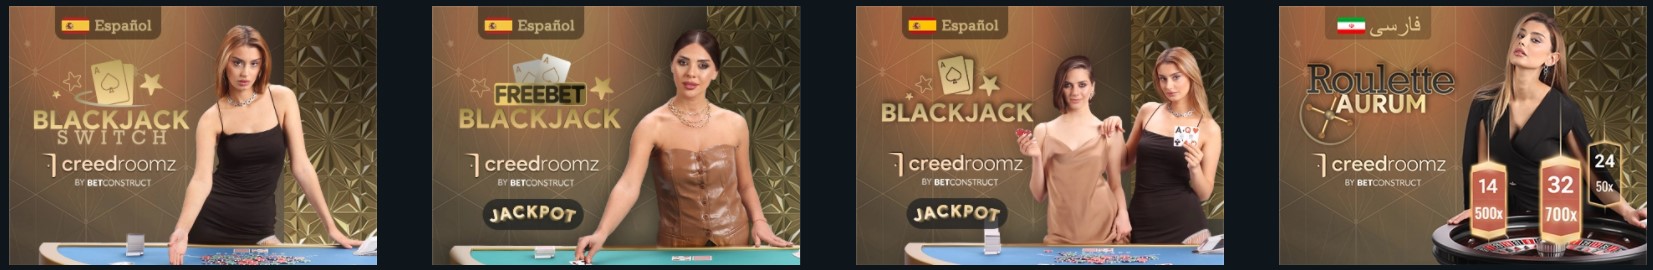 Gamabet Blackjack